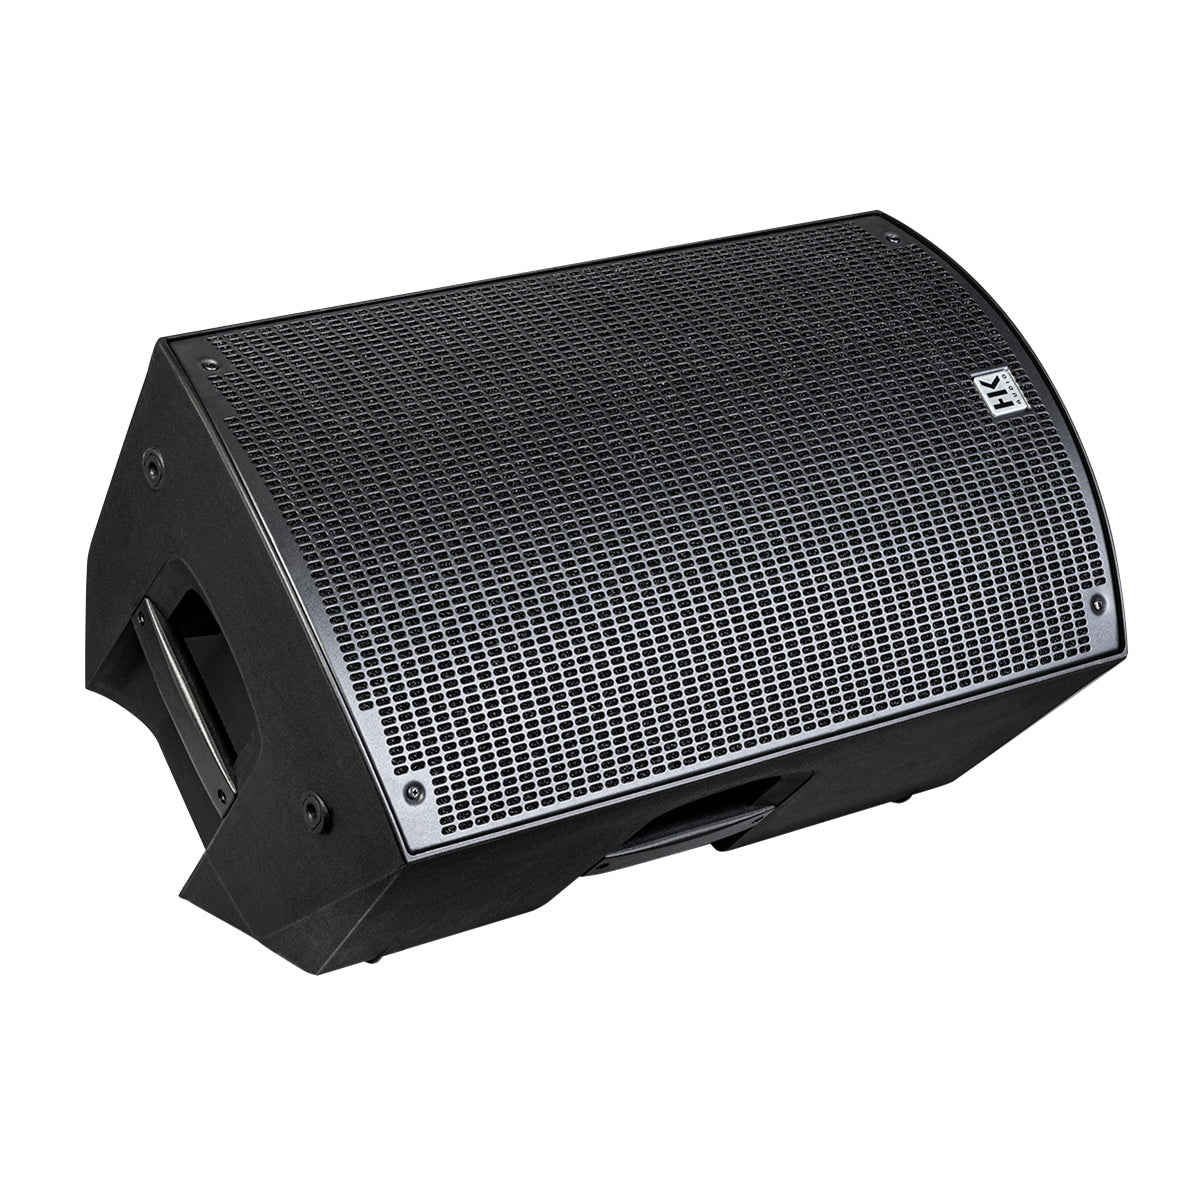 HK Audio Sonar 112 Xi 12" 2-Way 800W Powered Speaker